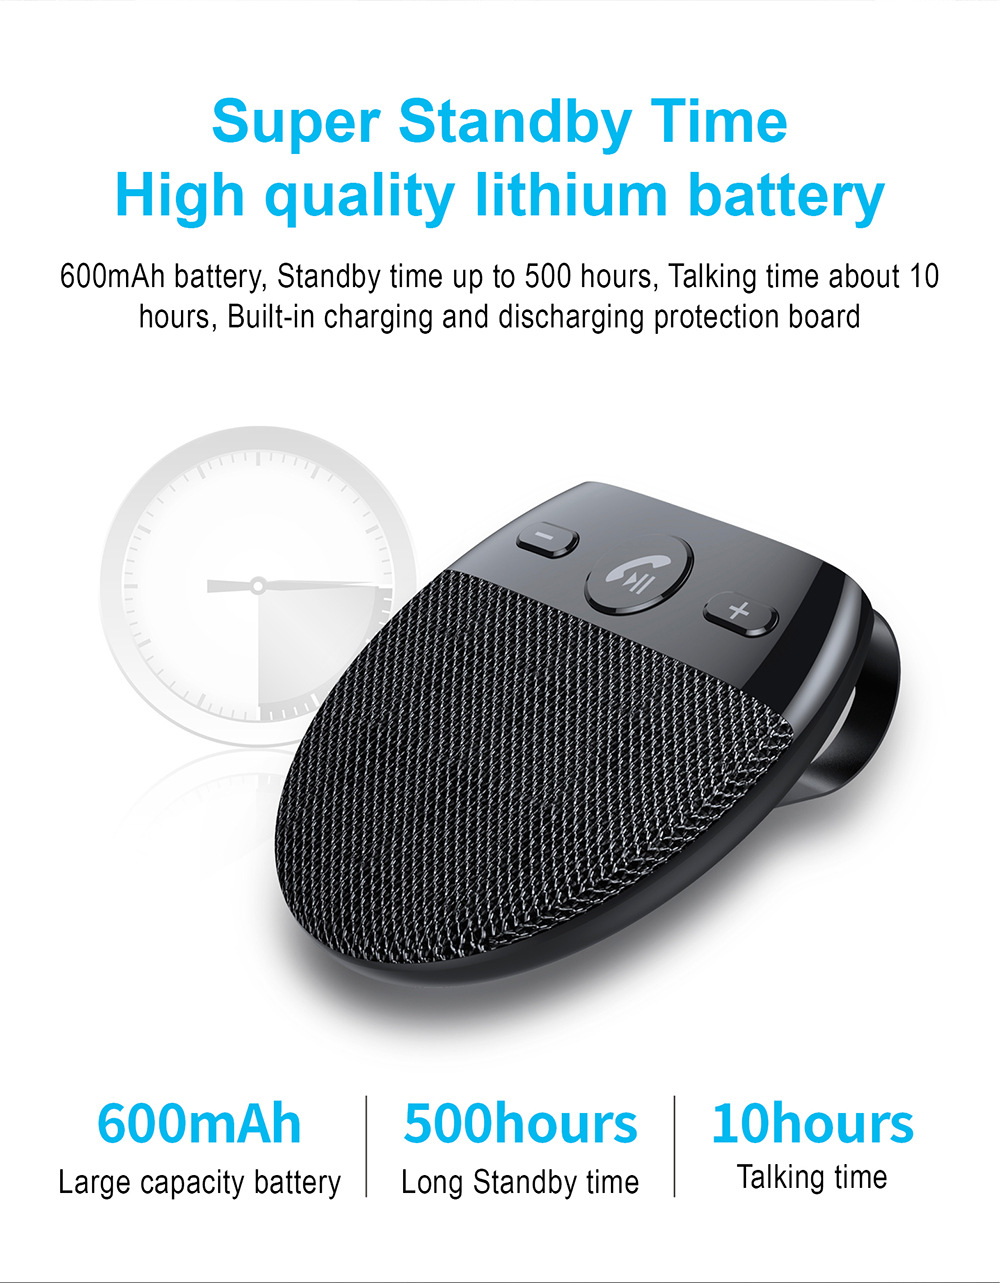 SP11-bluetooth-51-BT-Adapter-bluetooth-Car-Speaker-Handsfree-Speakerphone-500h-Battery-Life-1900018-8